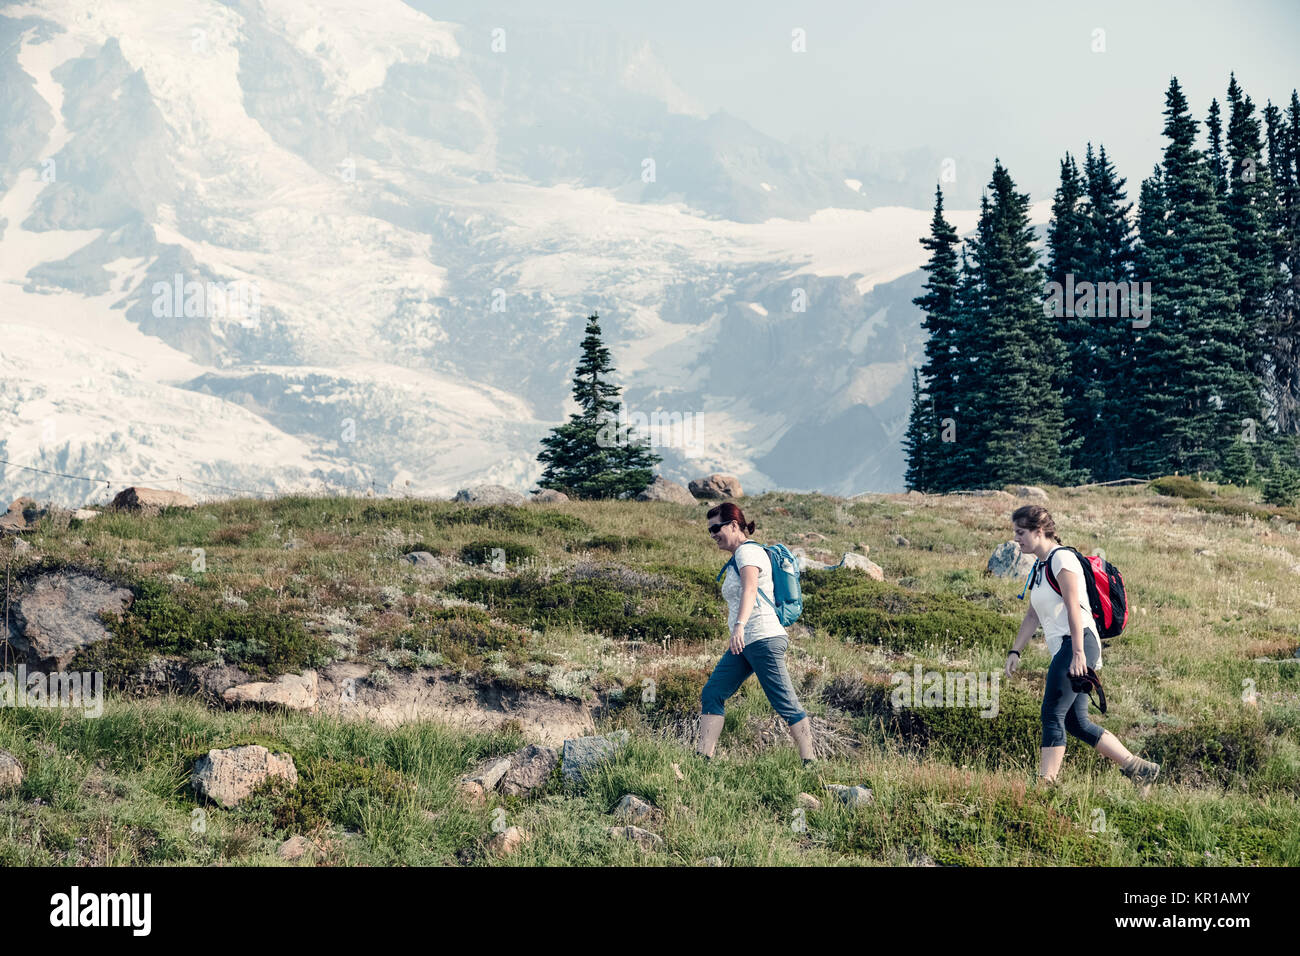 Two women hiking along an alpine trail, Mt Rainier, Washington, United States Stock Photo